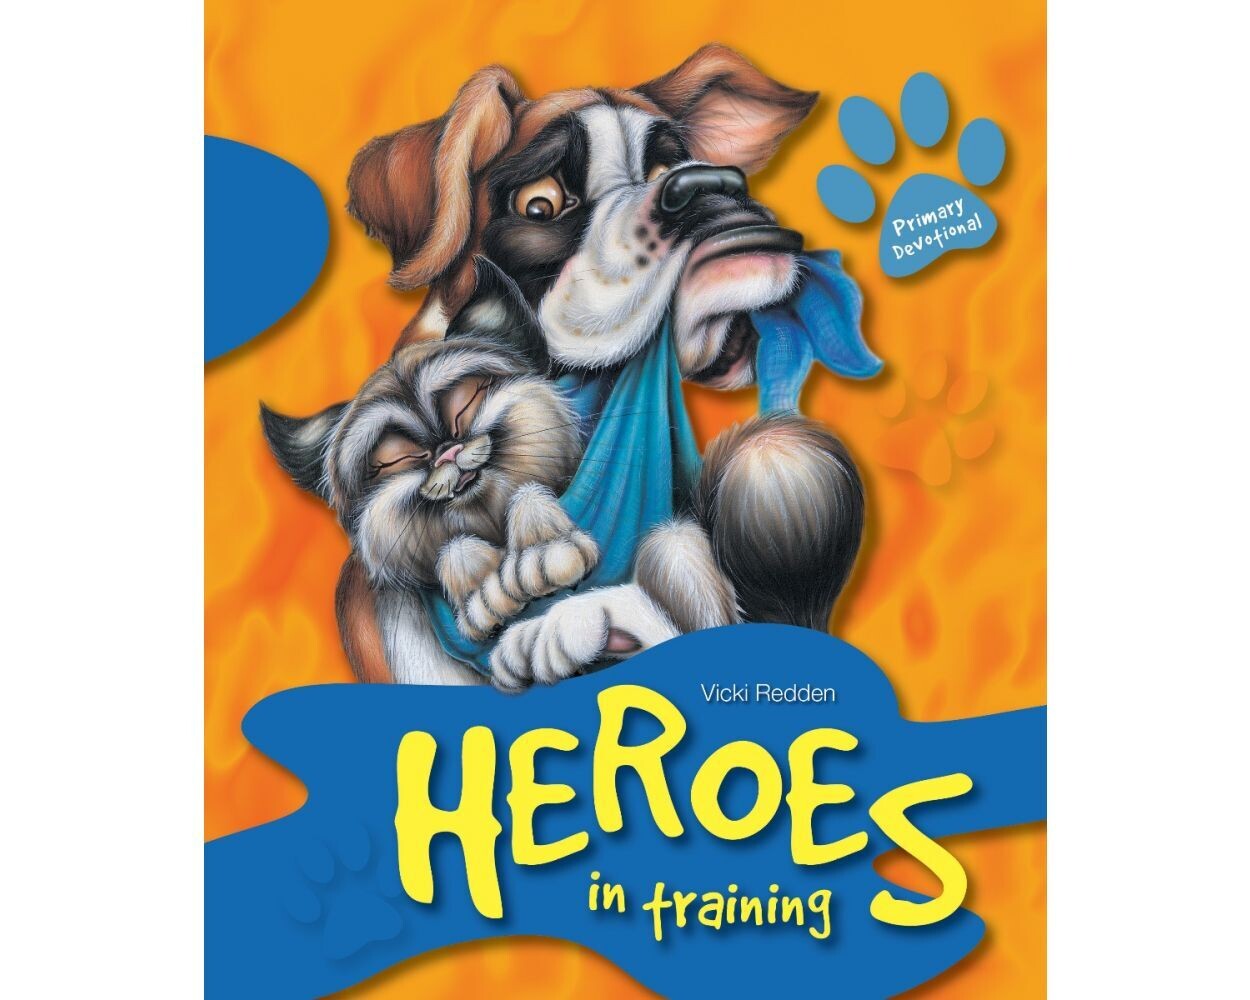 Heroes in Training Primary Devotional - Redden (B9)